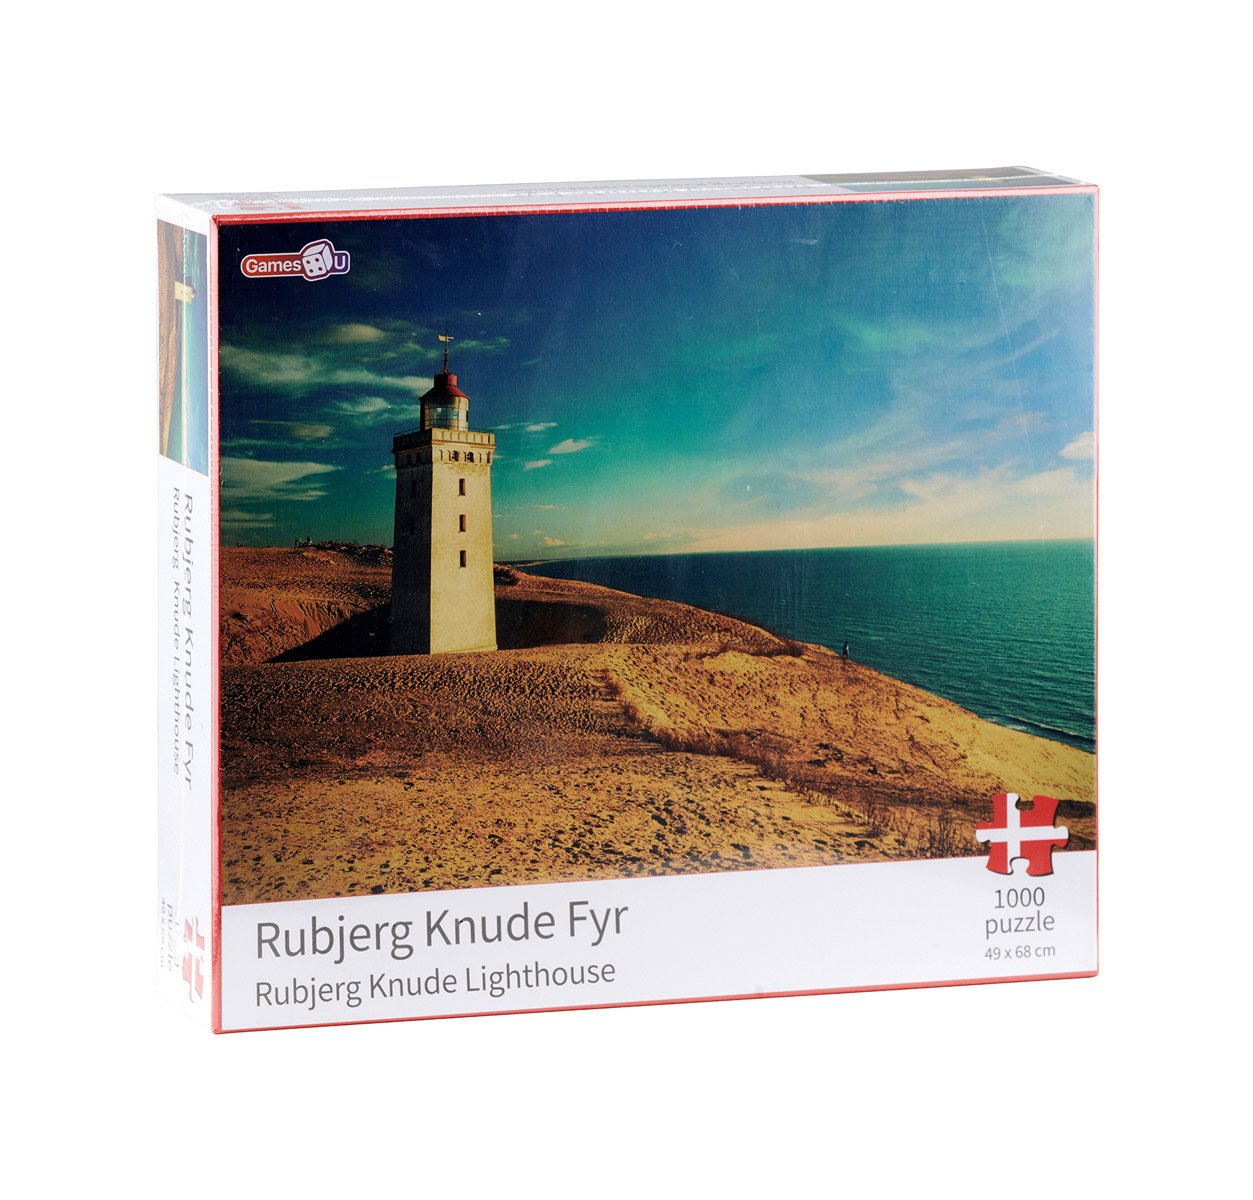 Denmark Puzzle - Rubjerg Knude Lighthouse(1000 pcs.)